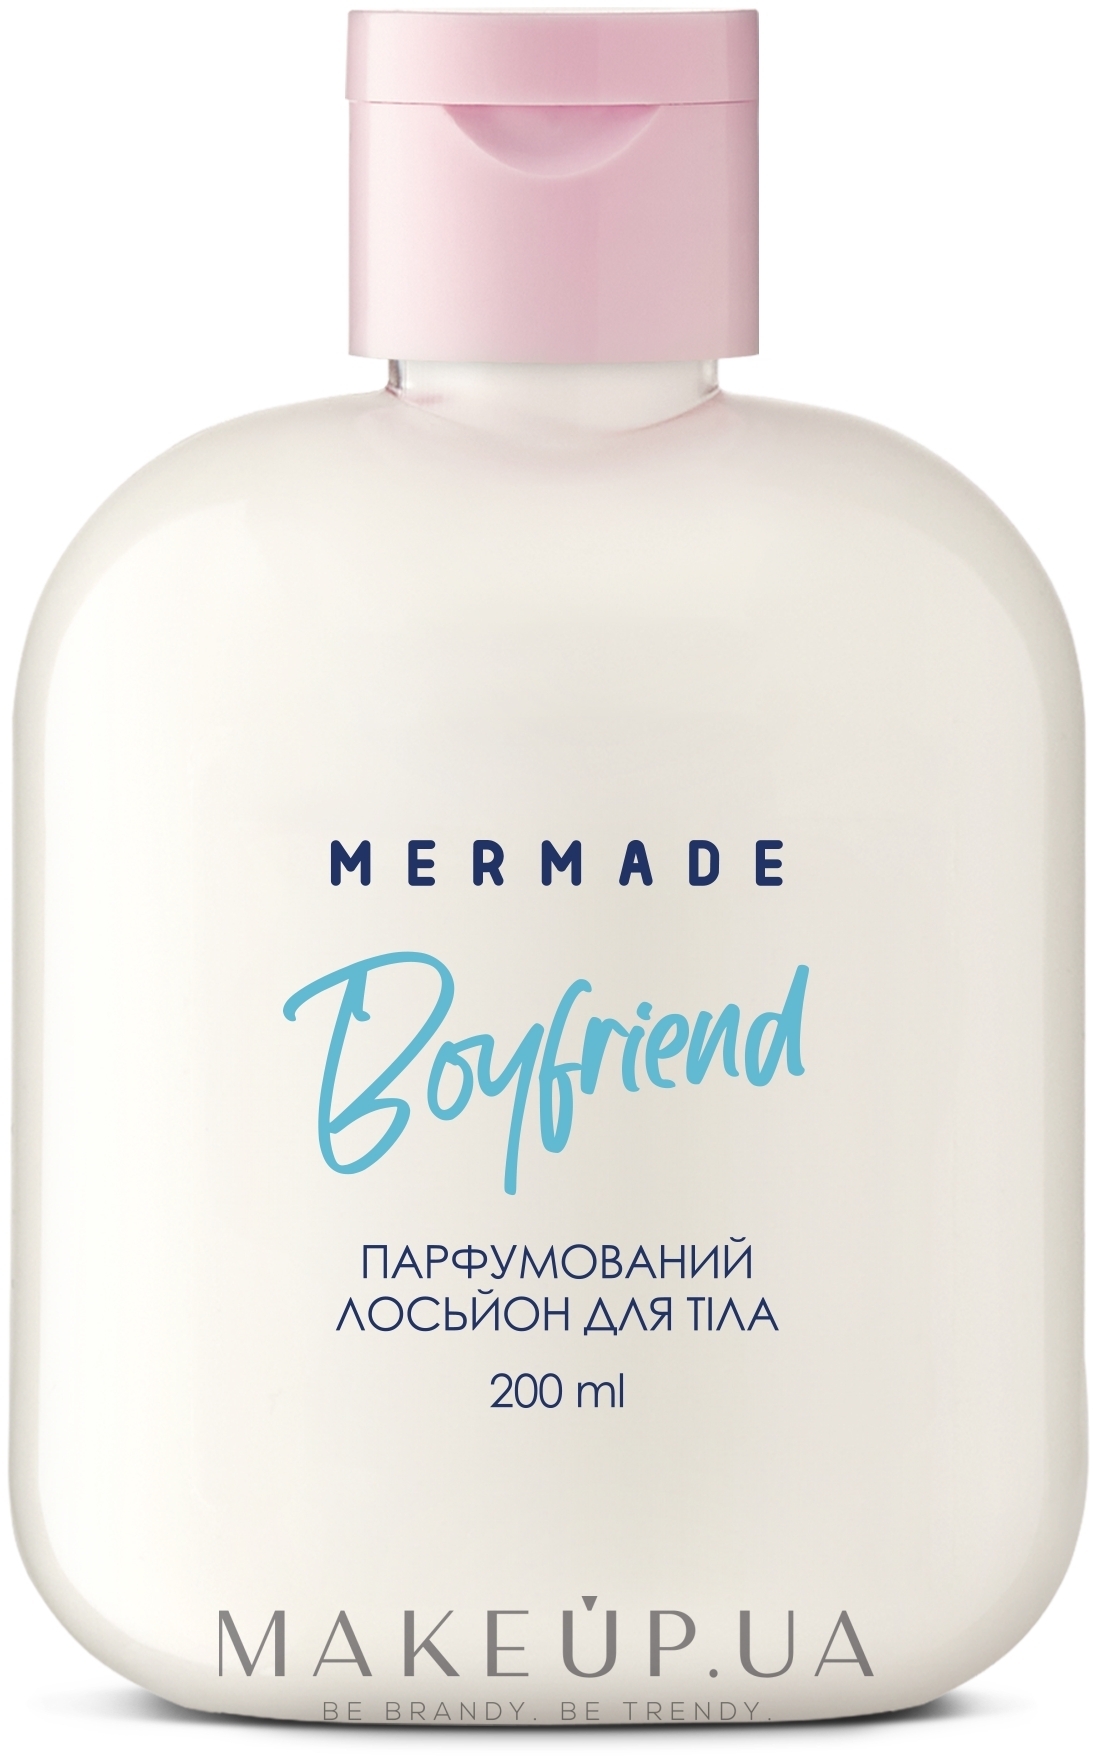 Mermade Boyfriend - Парфюмированный лосьон для тела — фото 200ml